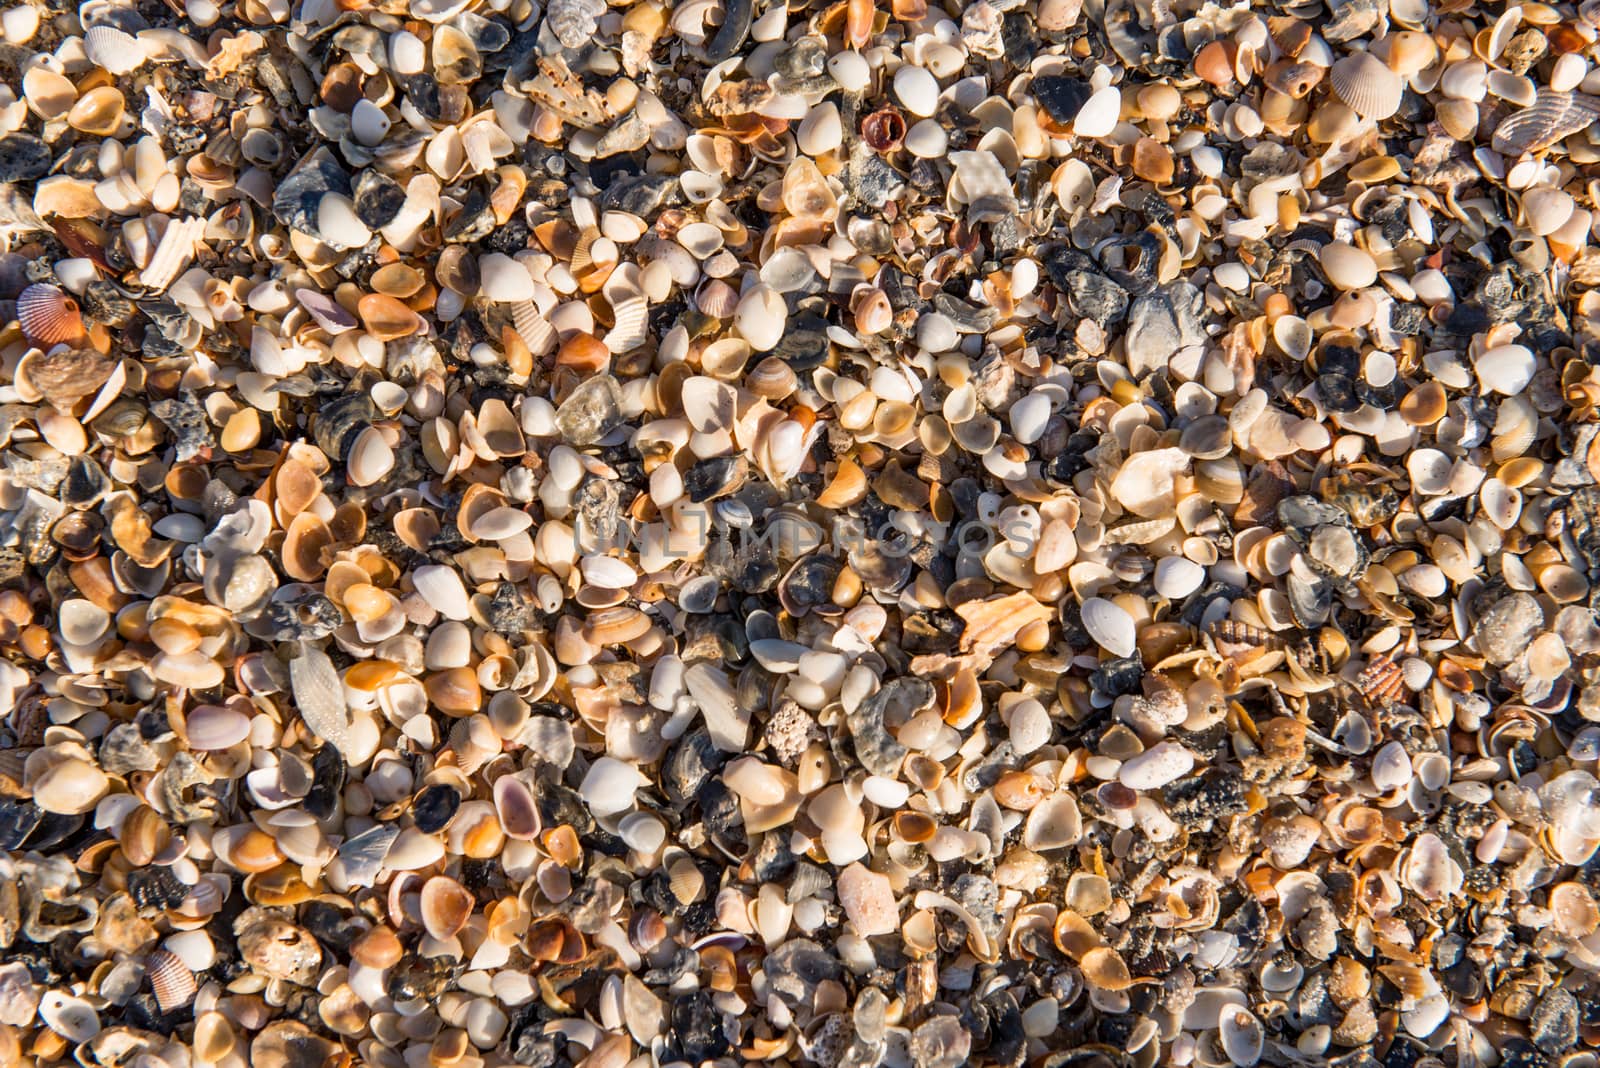 Diverse shells and sand pattern of an ocean beach.